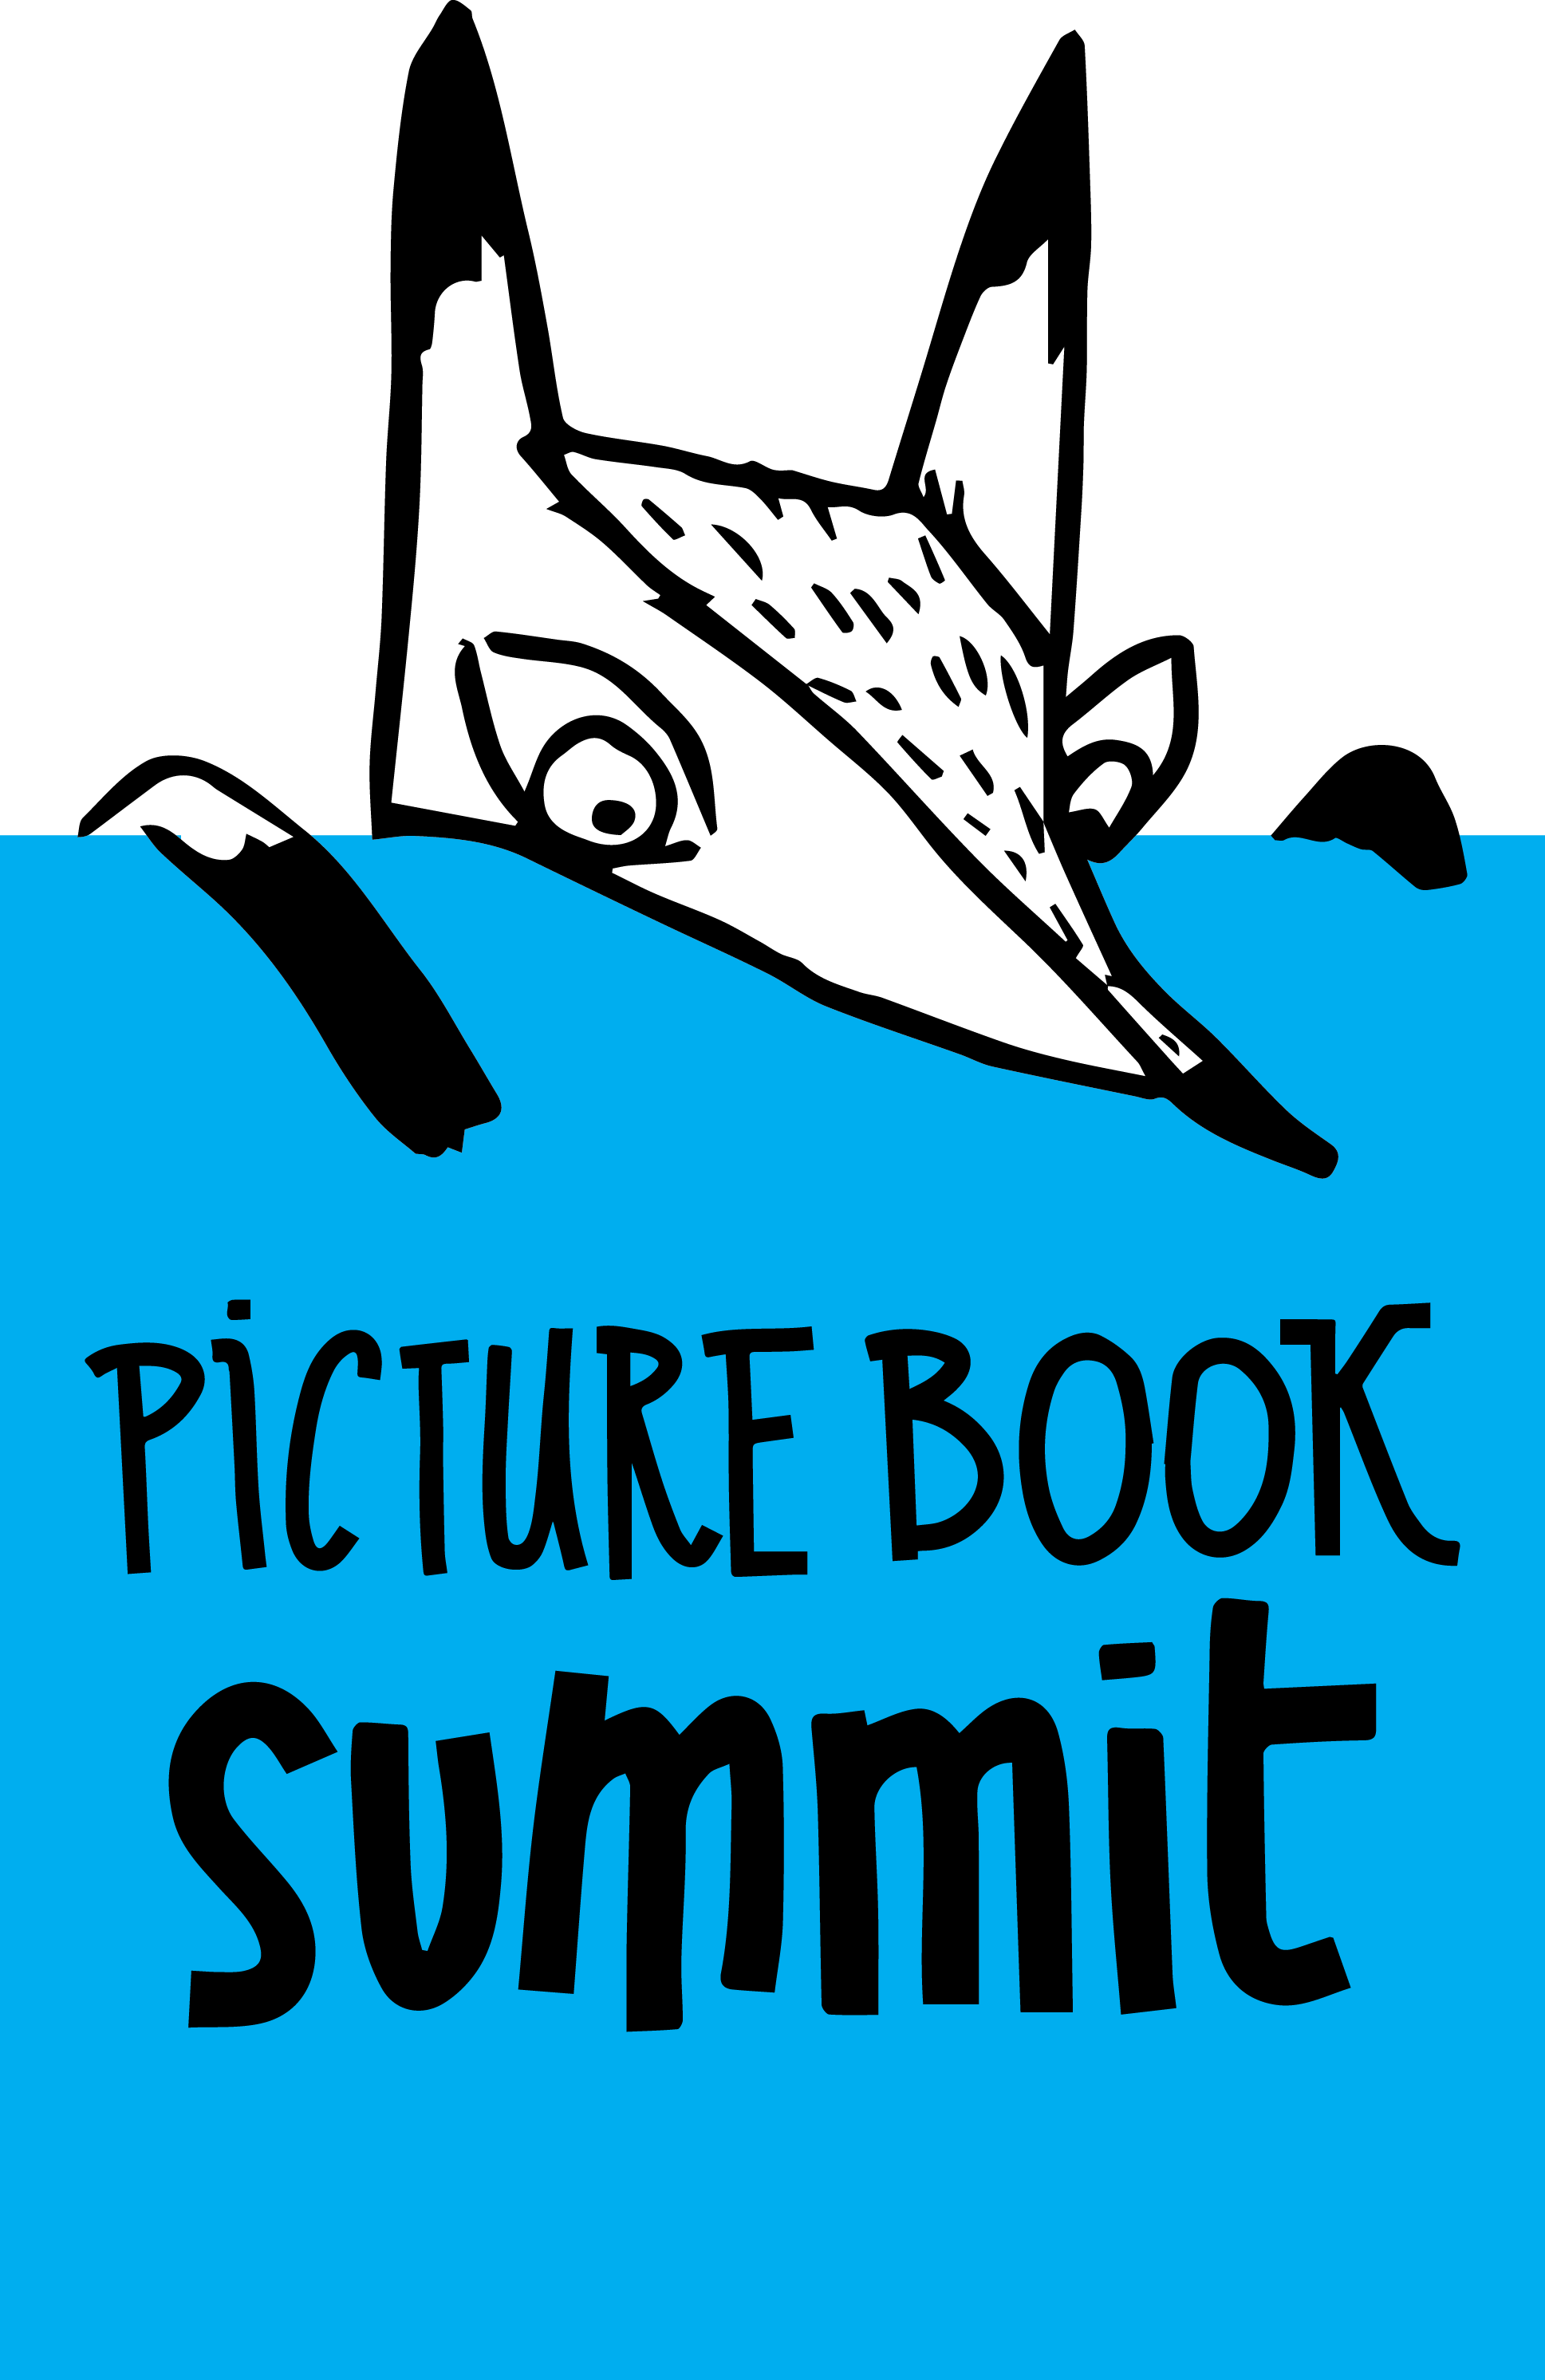 Picture Book Summit Team